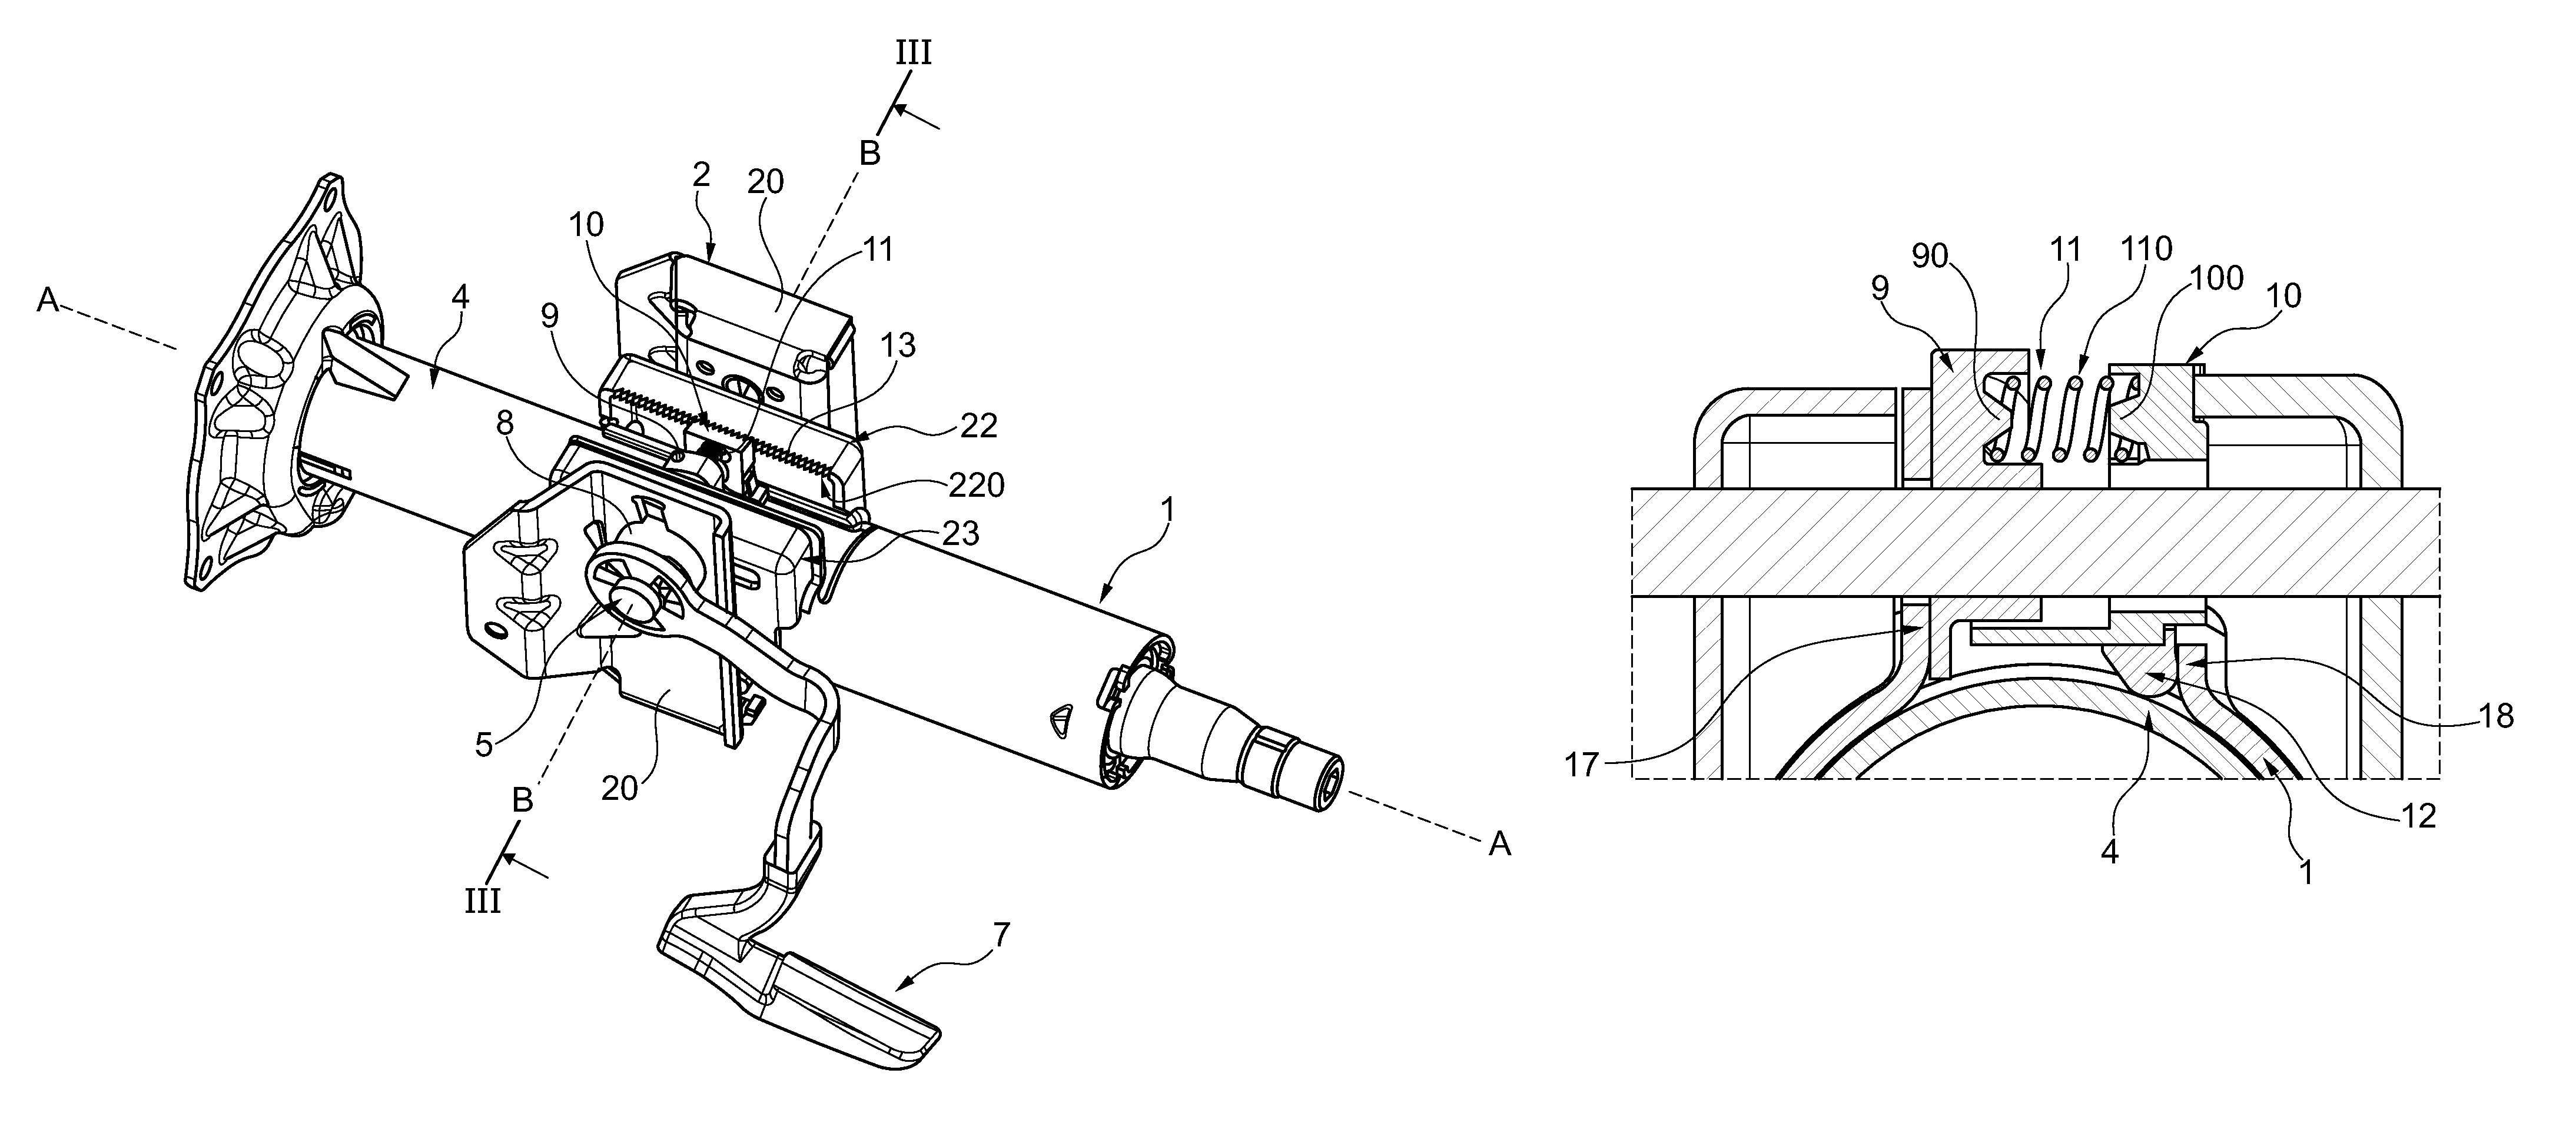 Steering column comprising an improved depth-blocking mechanism